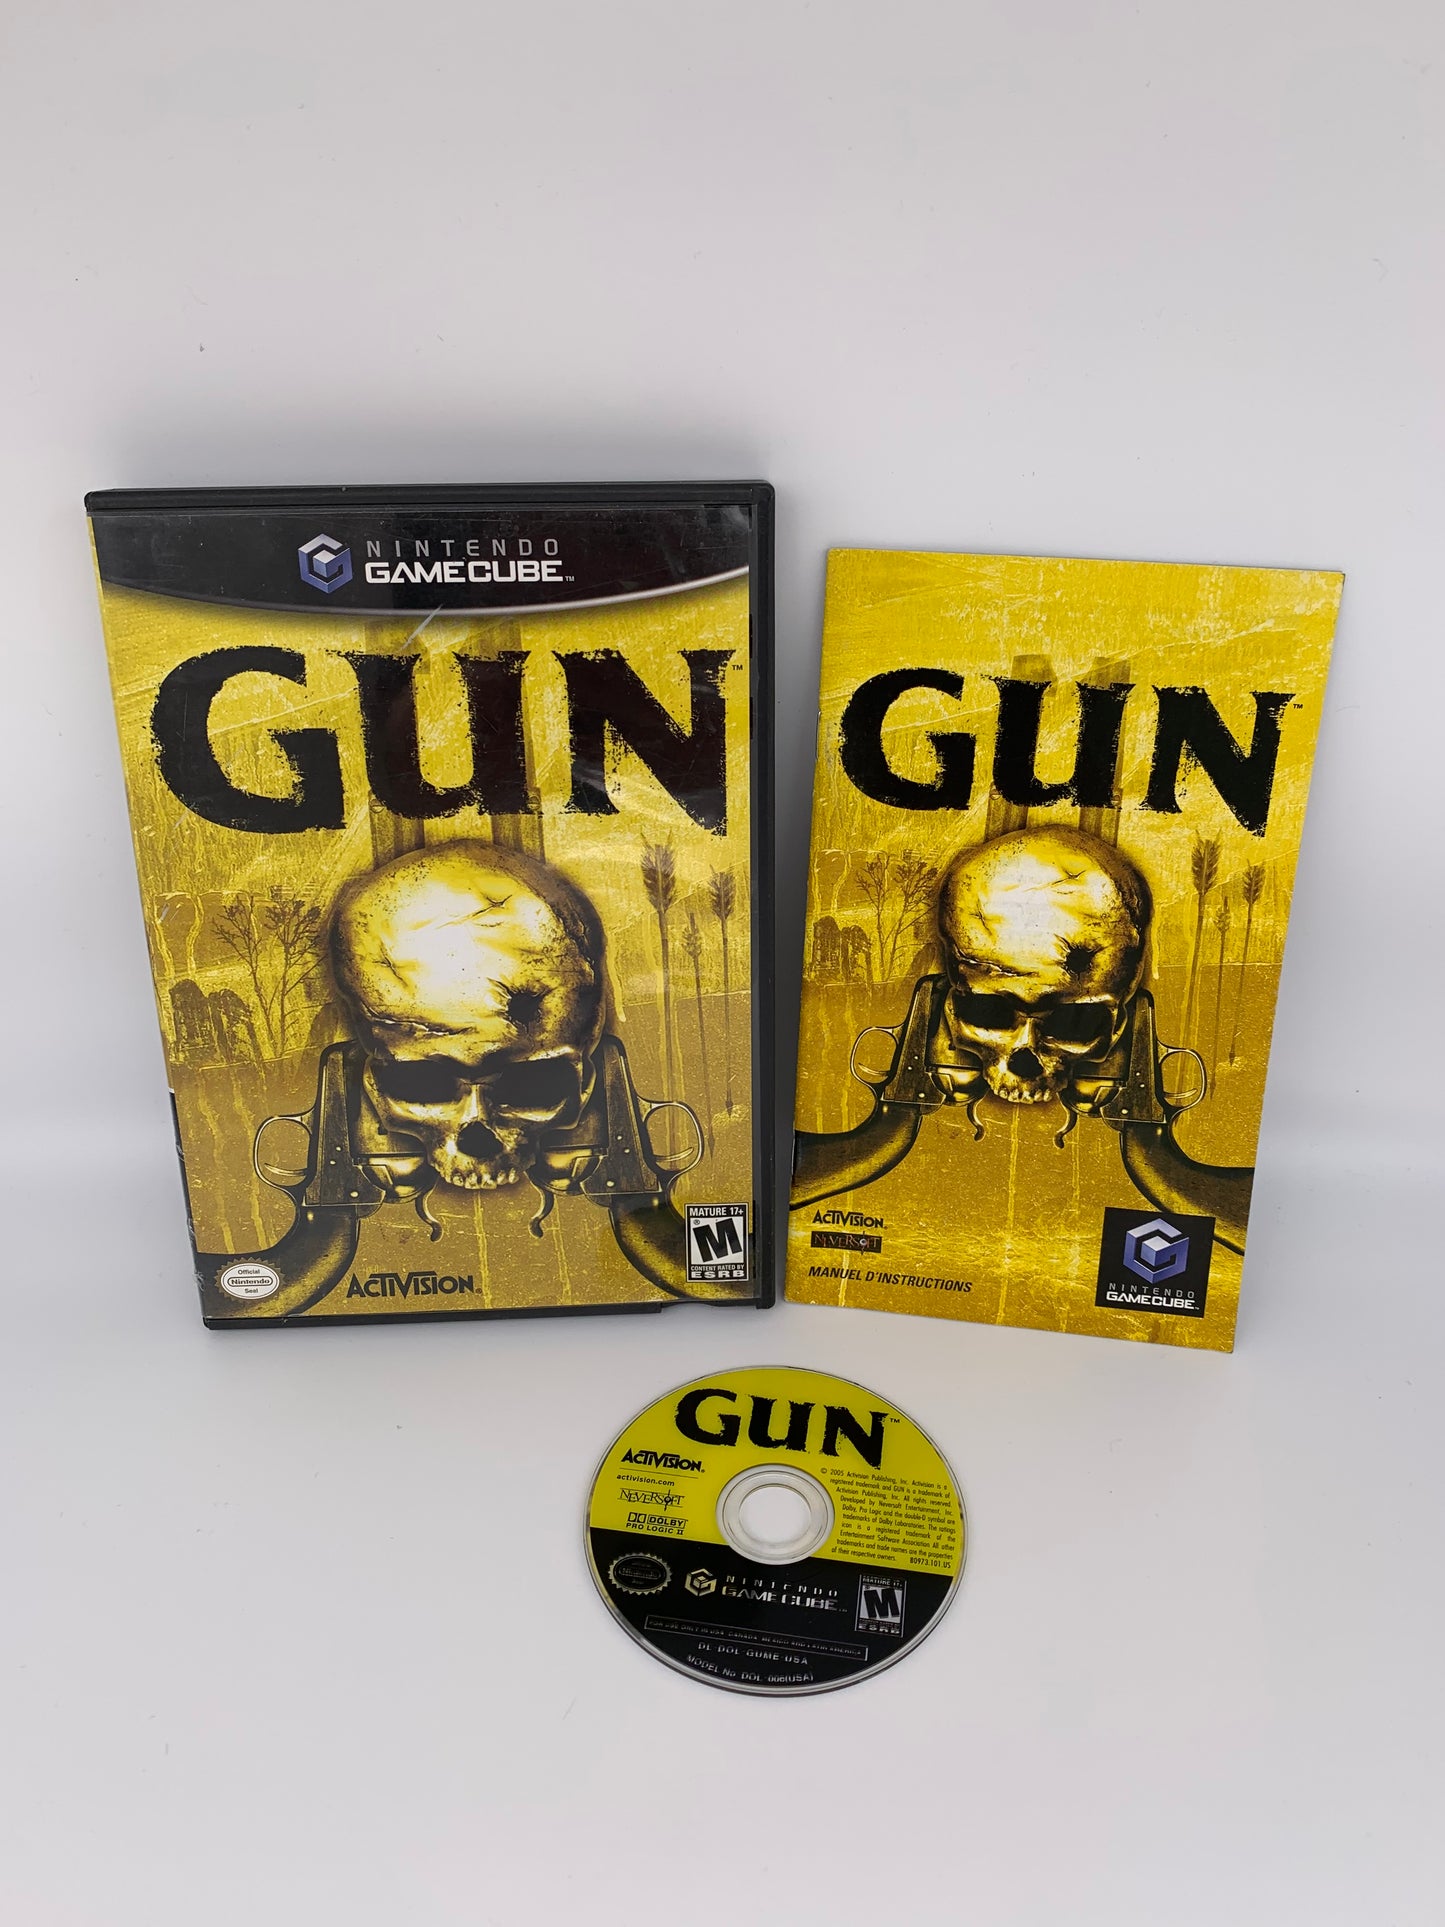 PiXEL-RETRO.COM : NINTENDO GAMECUBE COMPLETE CIB BOX MANUAL GAME NTSC GUN